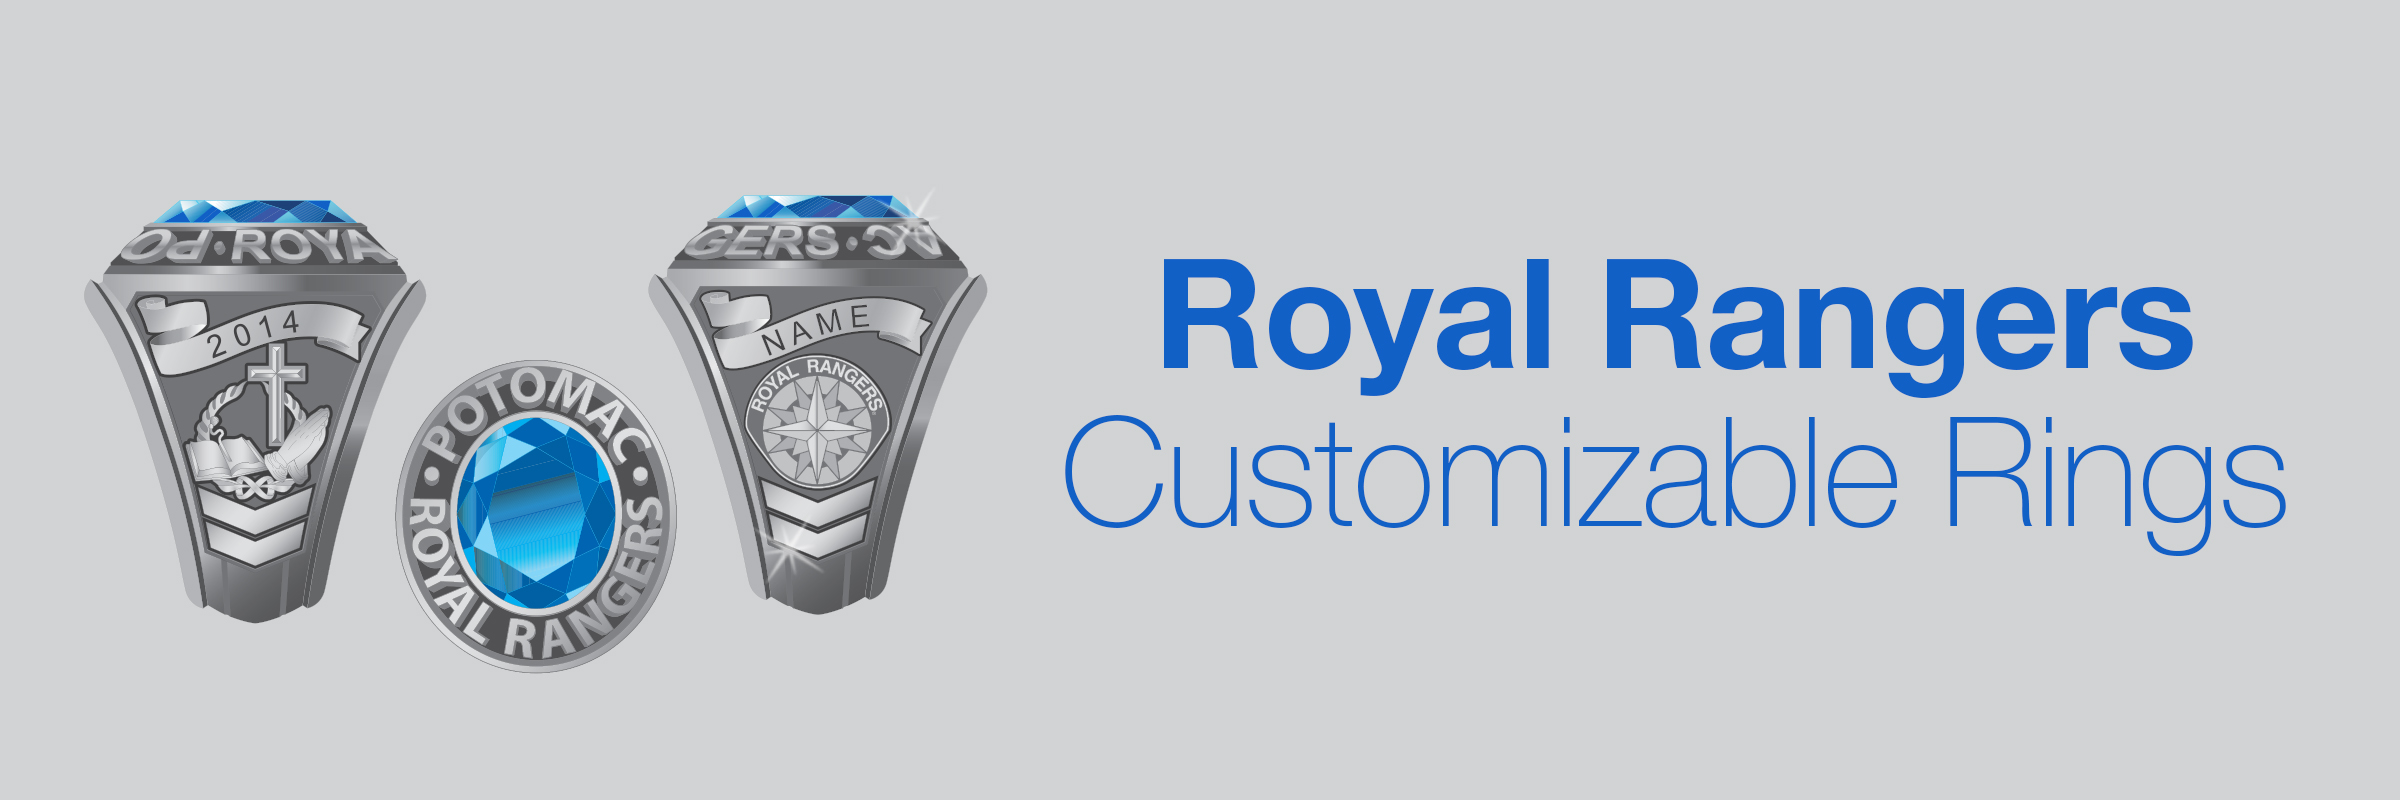 Royal Rangers Customizable Rings